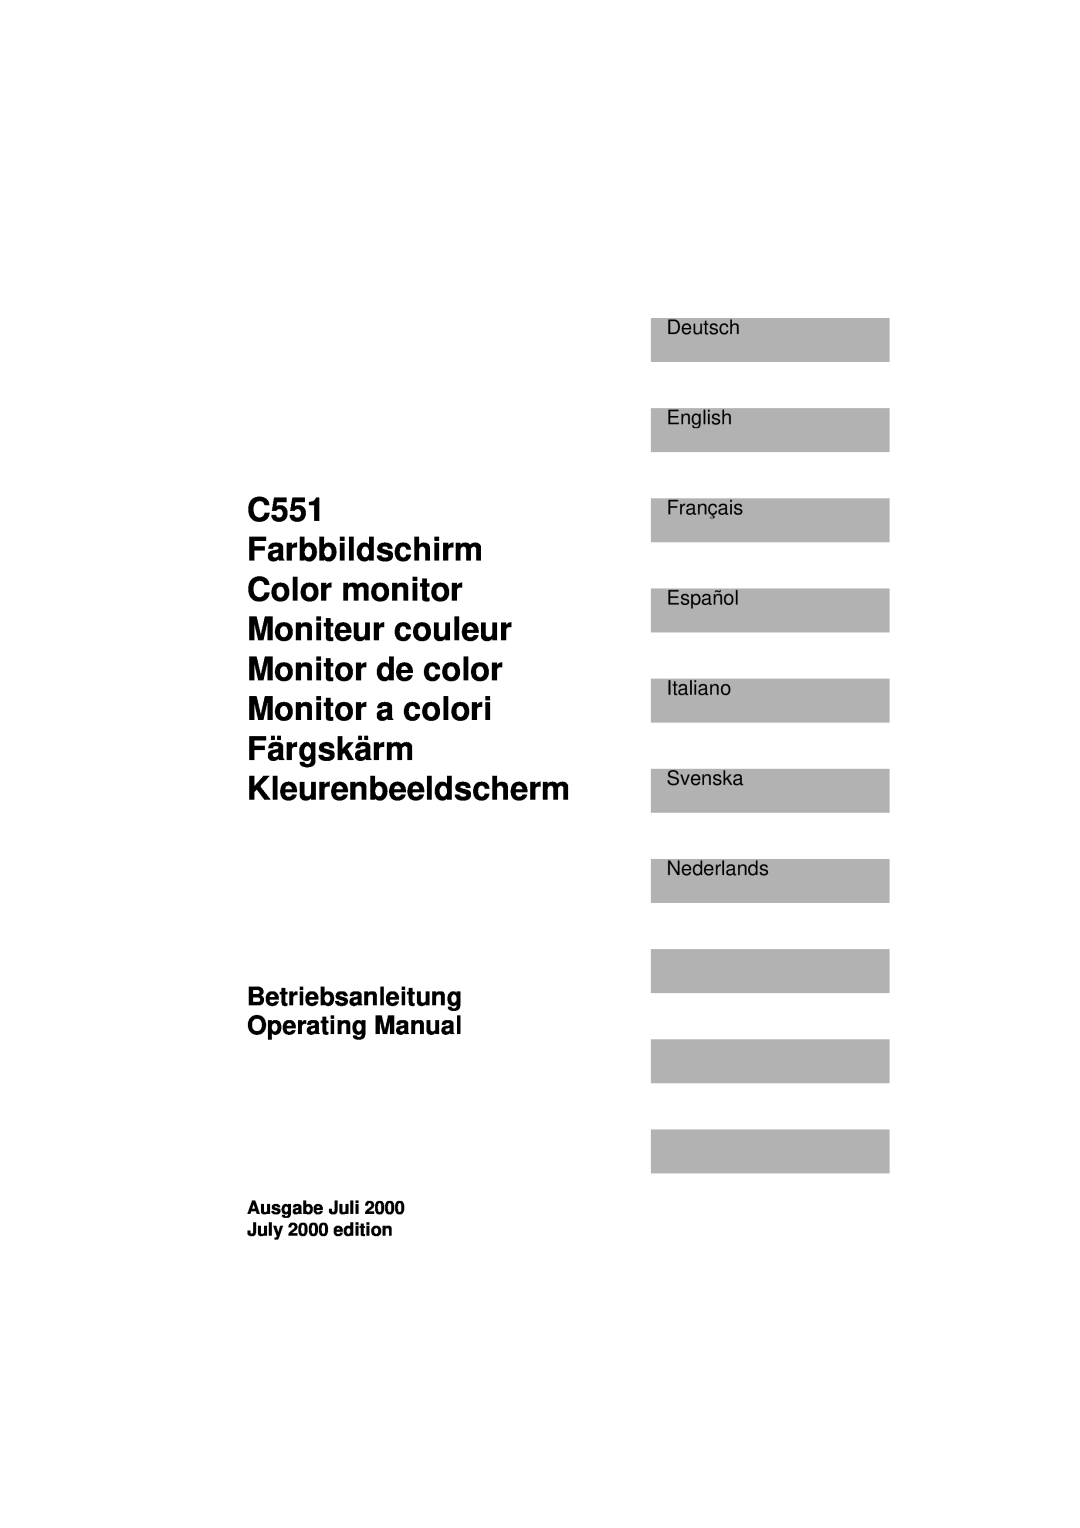 Fujitsu Siemens Computers C551 manual Betriebsanleitung Operating Manual, Ausgabe Juli 2000 July 2000 edition 